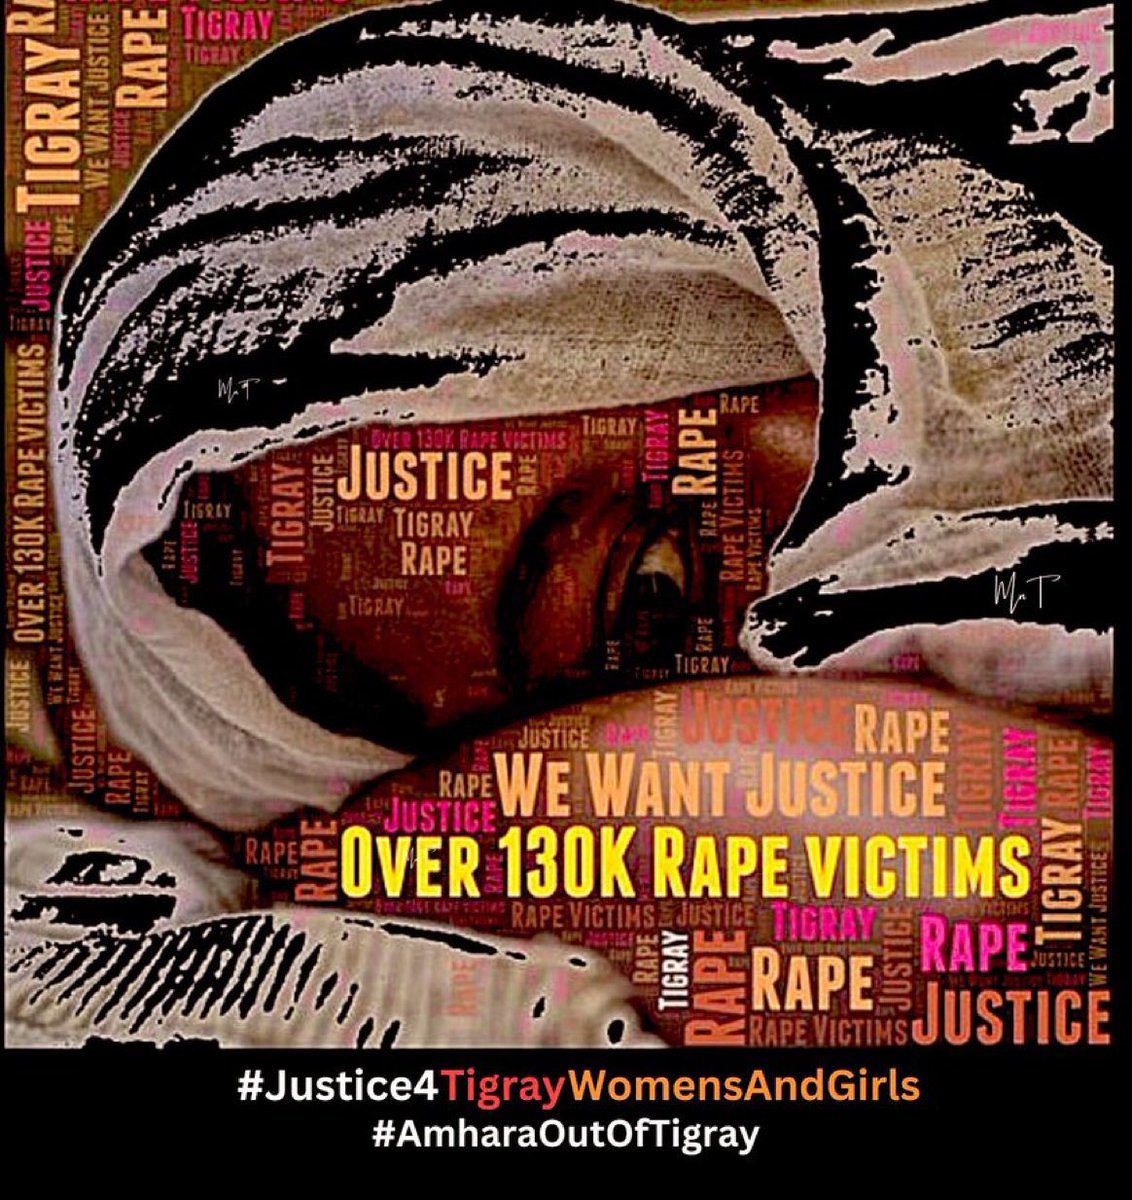 @UNWomenWatch @VP @unwomenchief @UN_Women @UN_HRC @UNGeneva @EUCouncil @eu_eeas @UKParliament @DavidAltonHL @BradSherman @LindaT_G @UN @IntlCrimCourt 6

Due to the #TigrayGenocide War,
+120K have been victims of SGBV. Survivors have been left without psychological & medical care. Where is the int’l community on this #MothersDay #Justice4TigraysWomenAndGirls
@UN_HRC @UN @USUN @UNGeneva